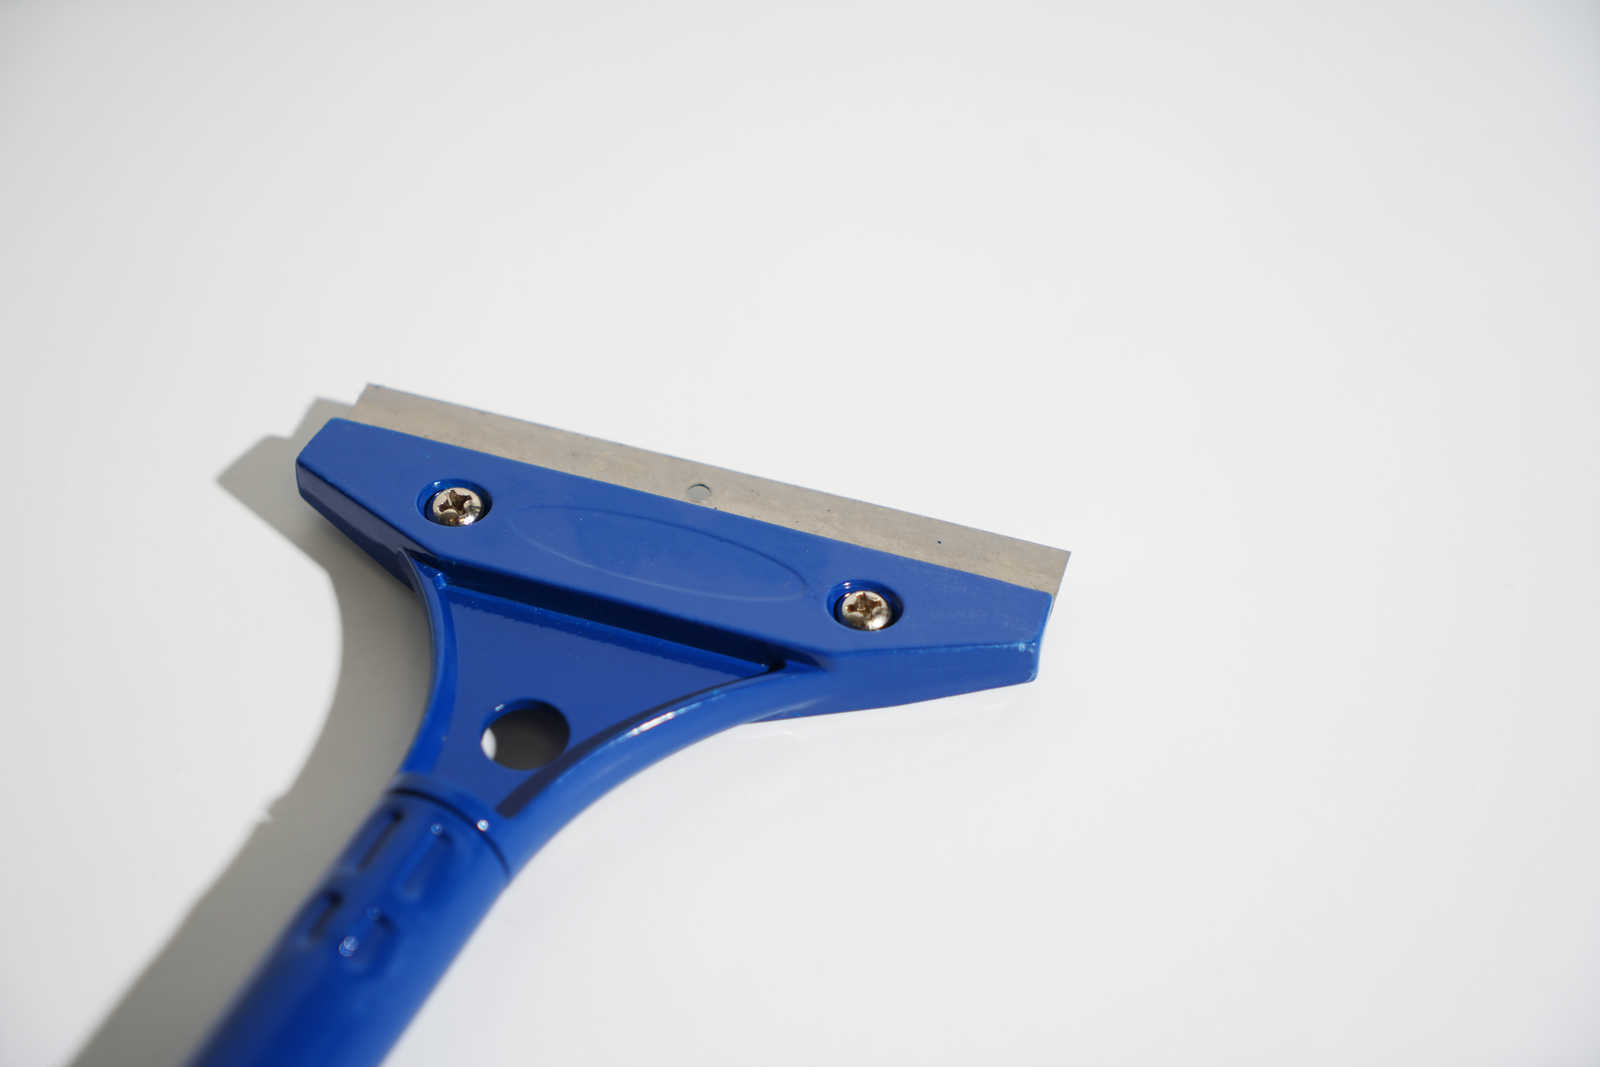             Wallpaper scraper 10cm blade with rubberized handle
        